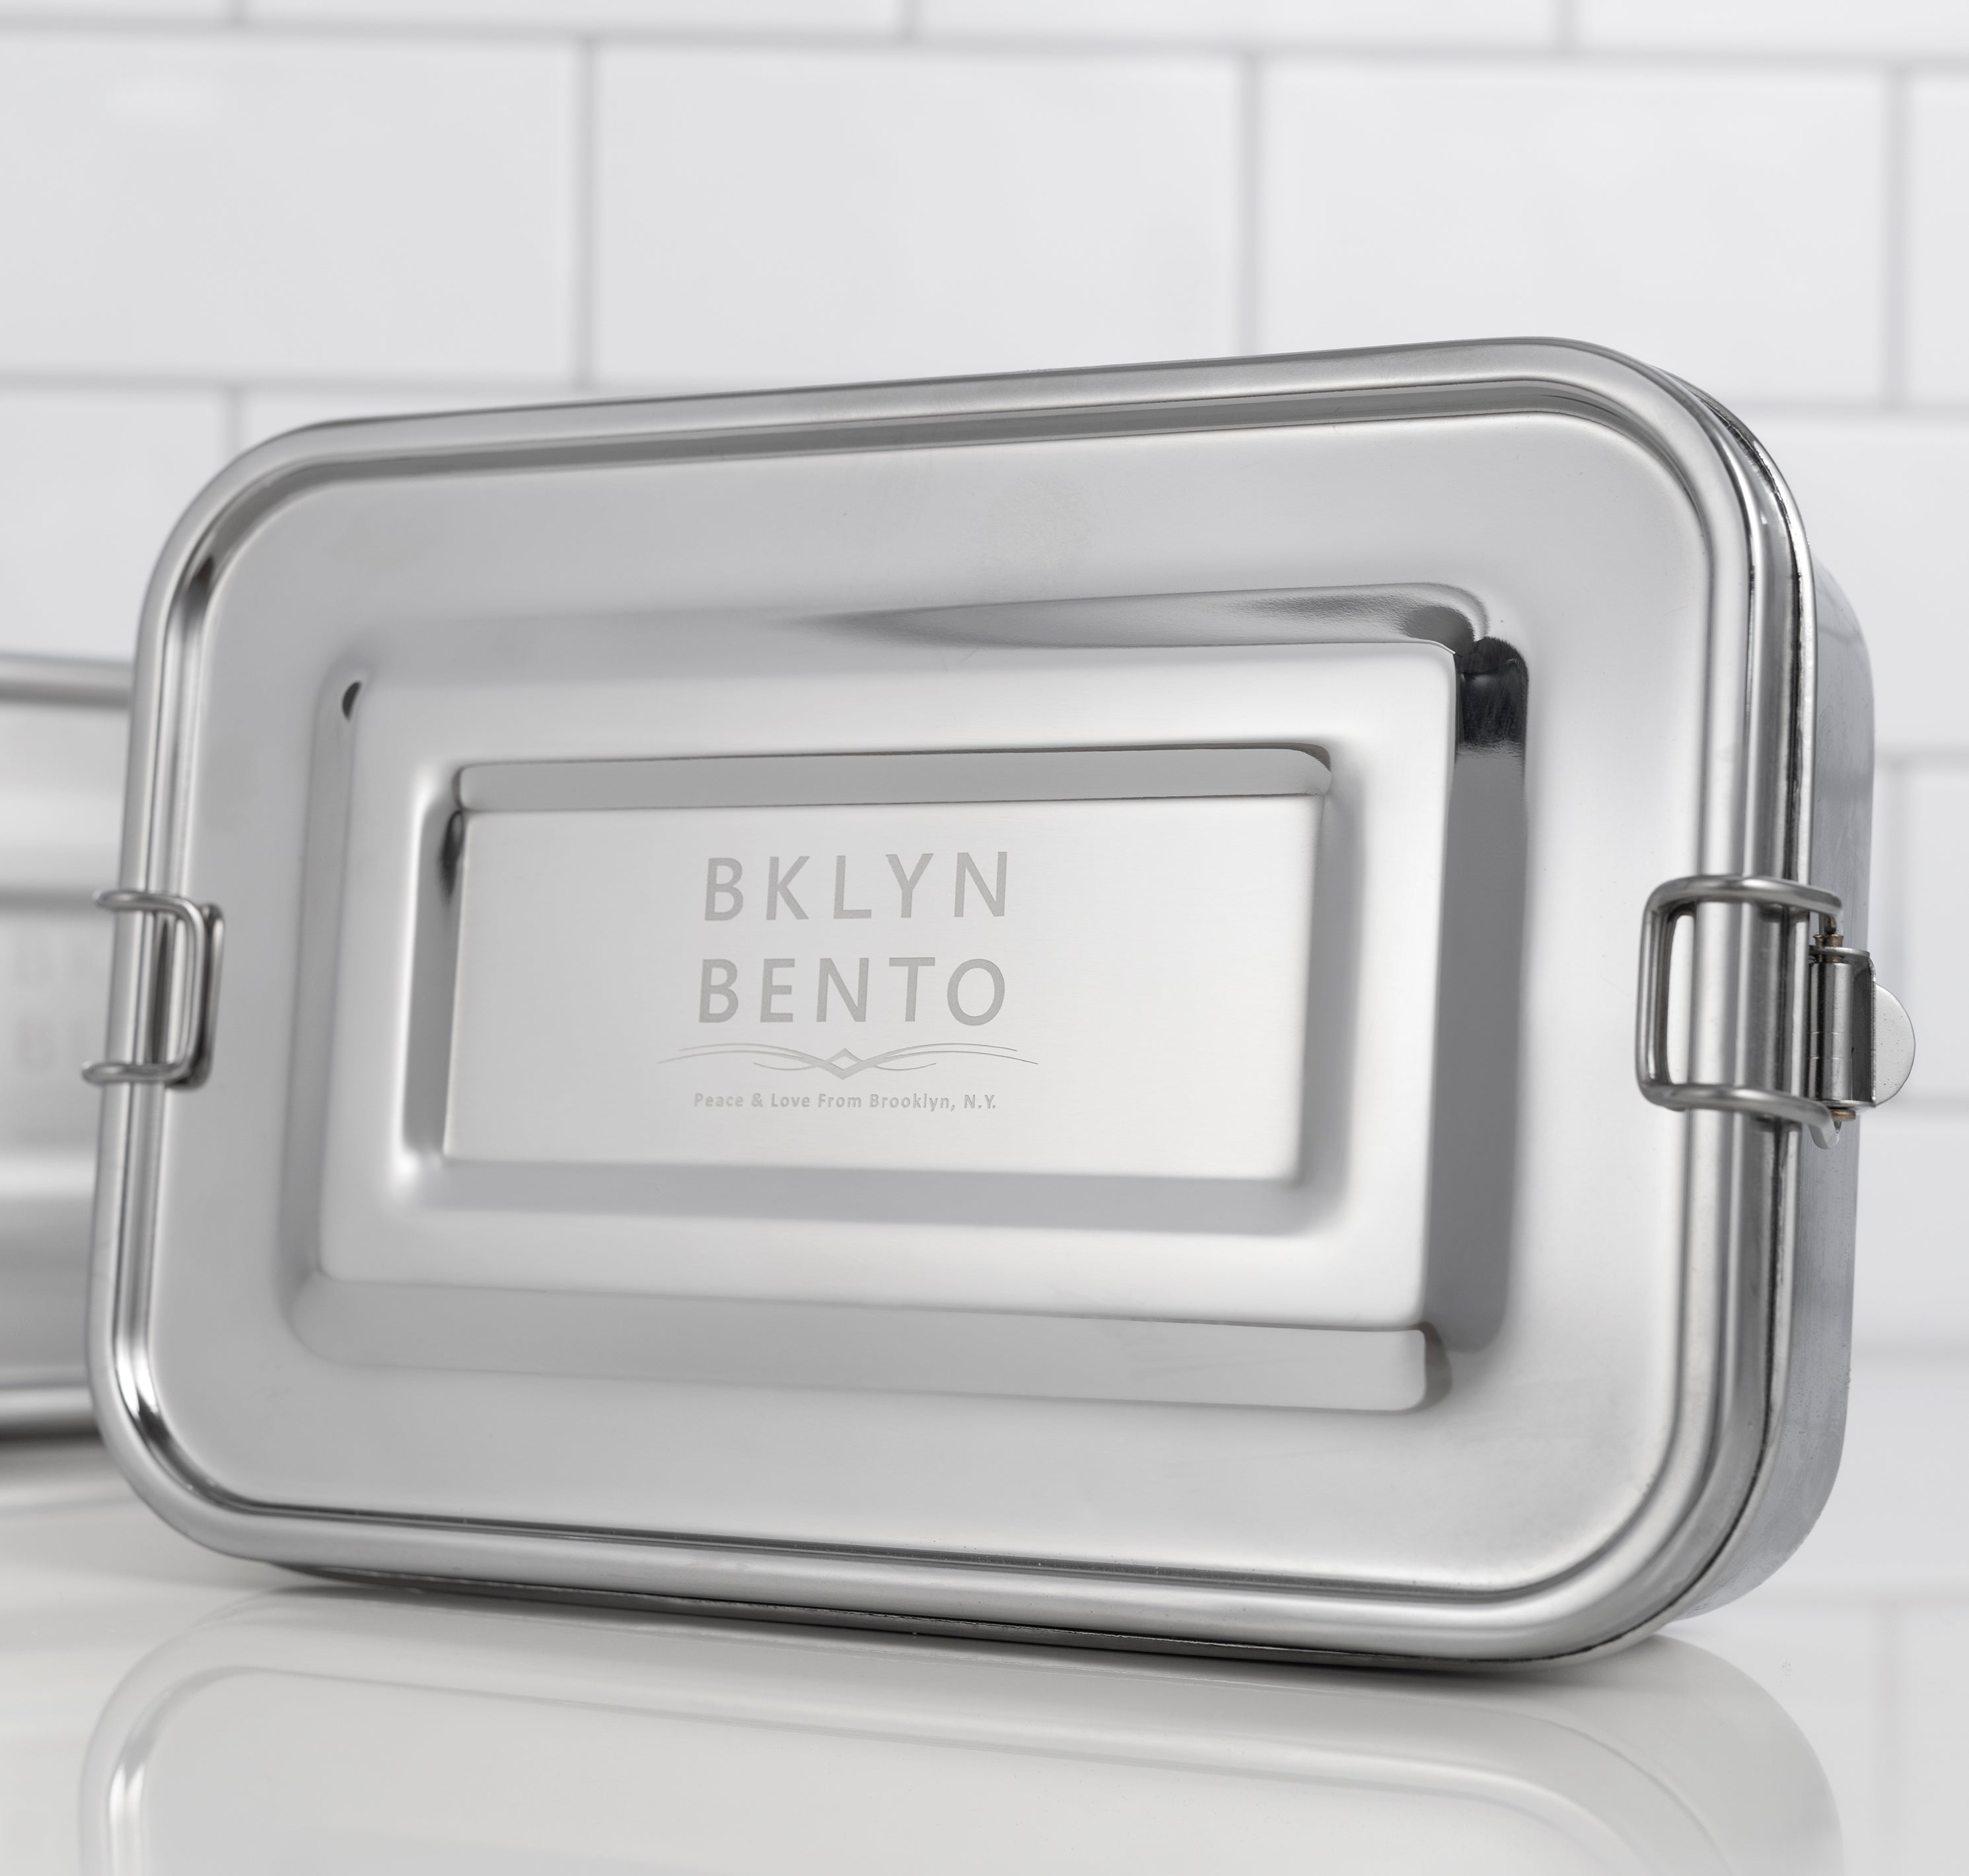 Black+Blum Stainless Steel Sandwich Box – Onekea Bros. General Store